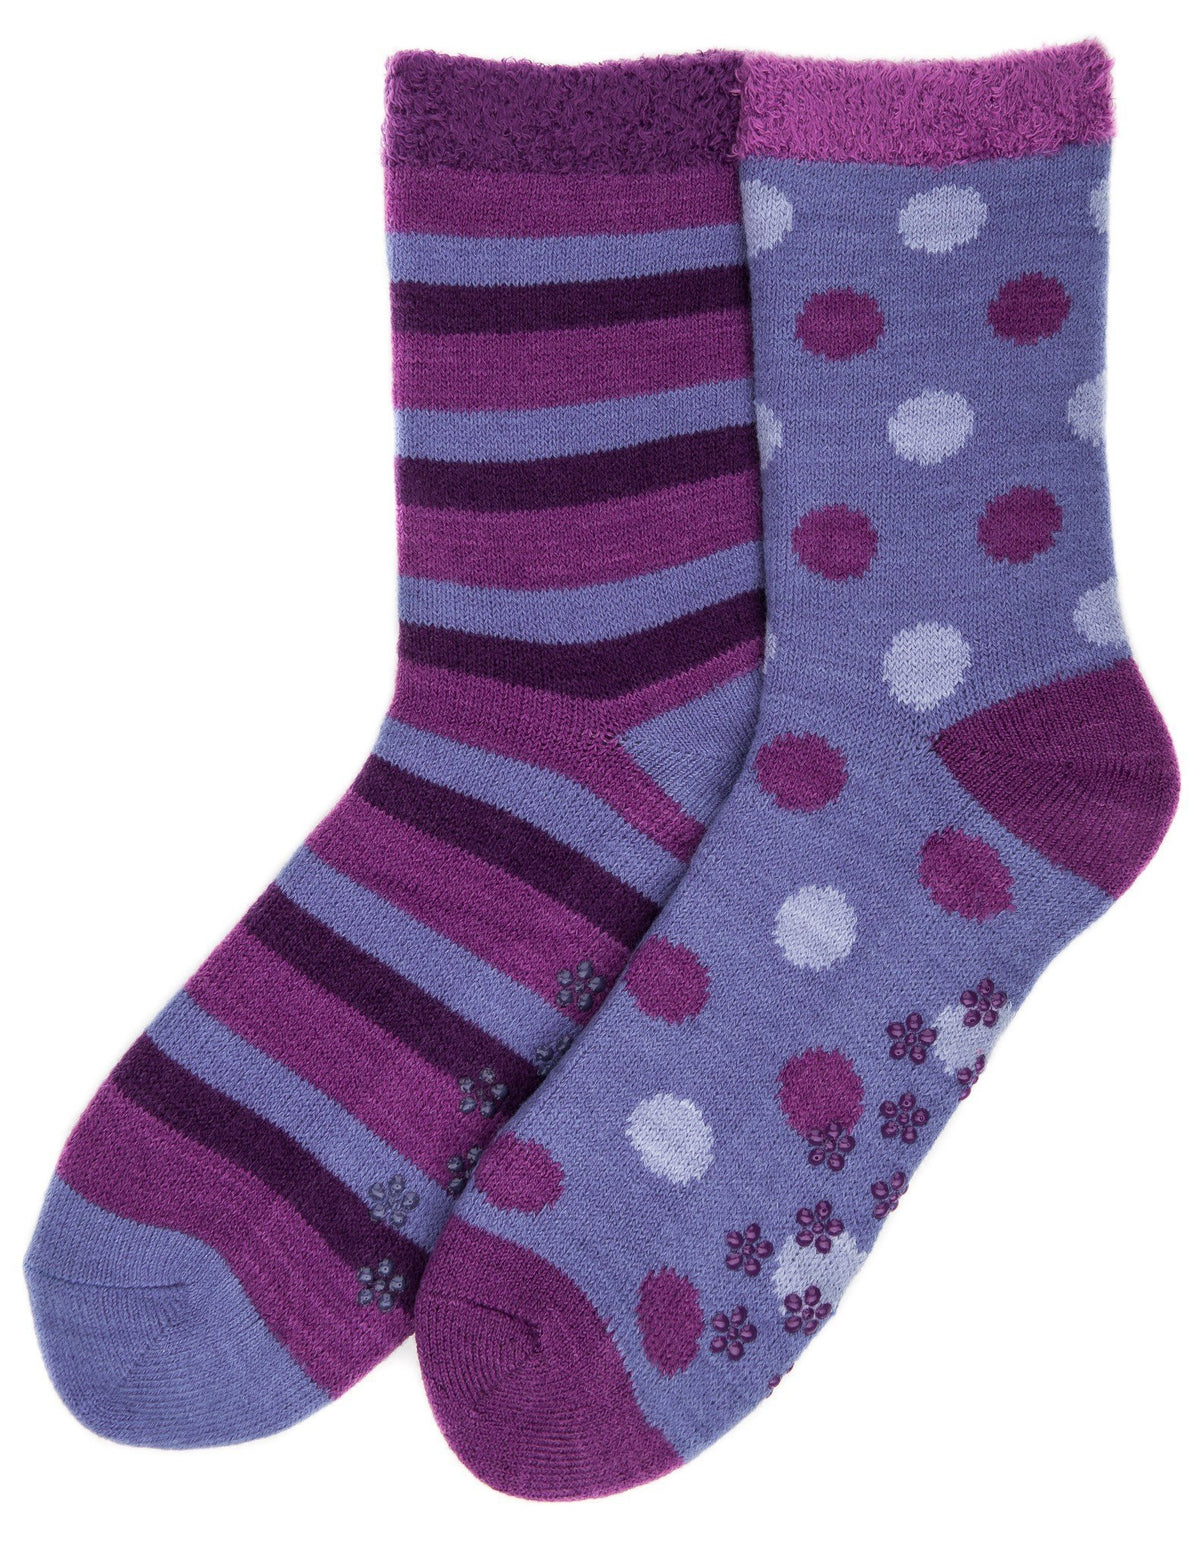 Women's Soft Premium Double Layer Winter Crew Socks - 2 Pairs - Set A1